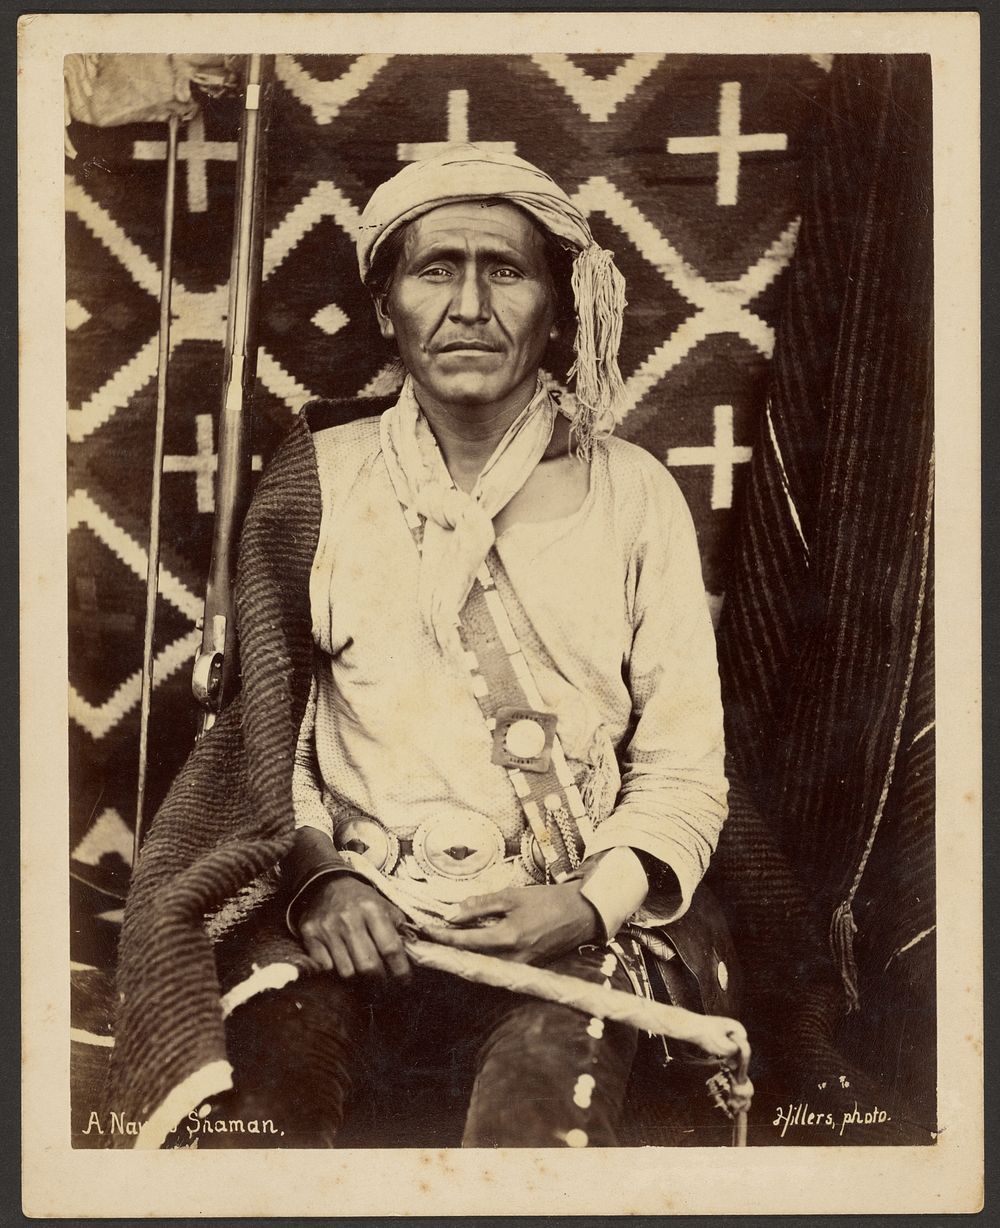 A Navajo Shaman by John K Hillers